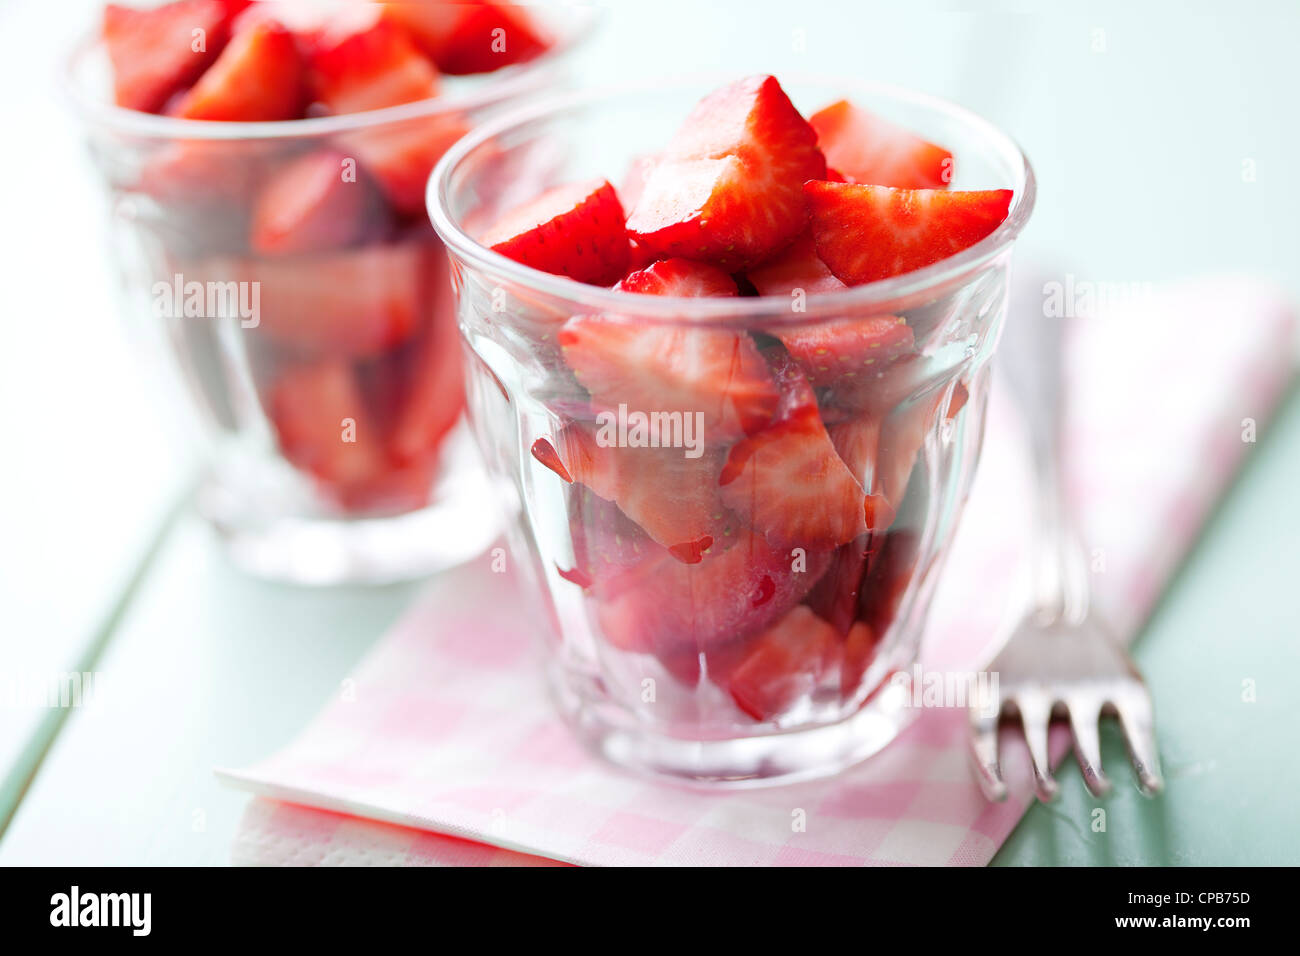 strawberry Stock Photo